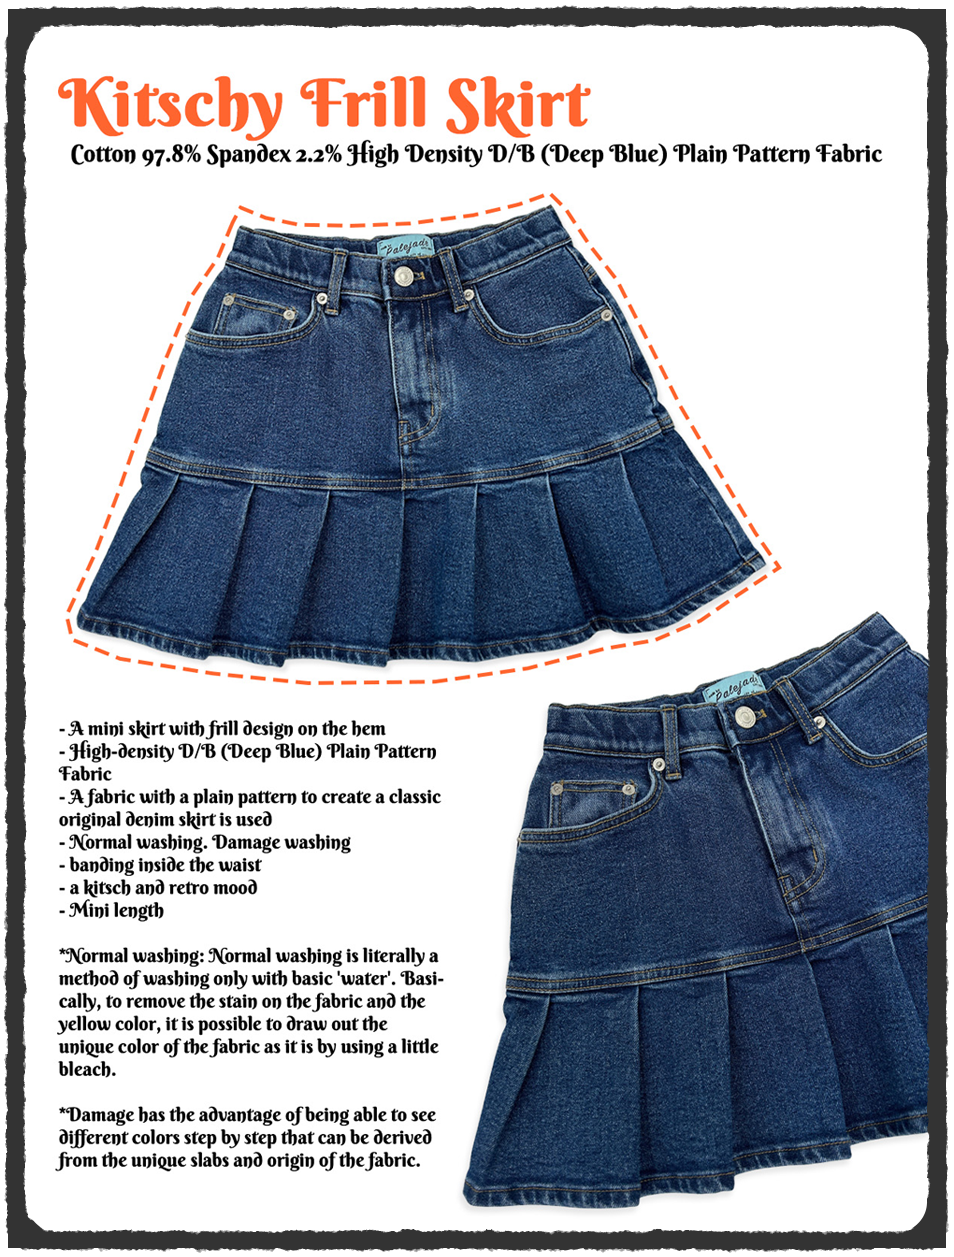 Kitschy Frill Skirt